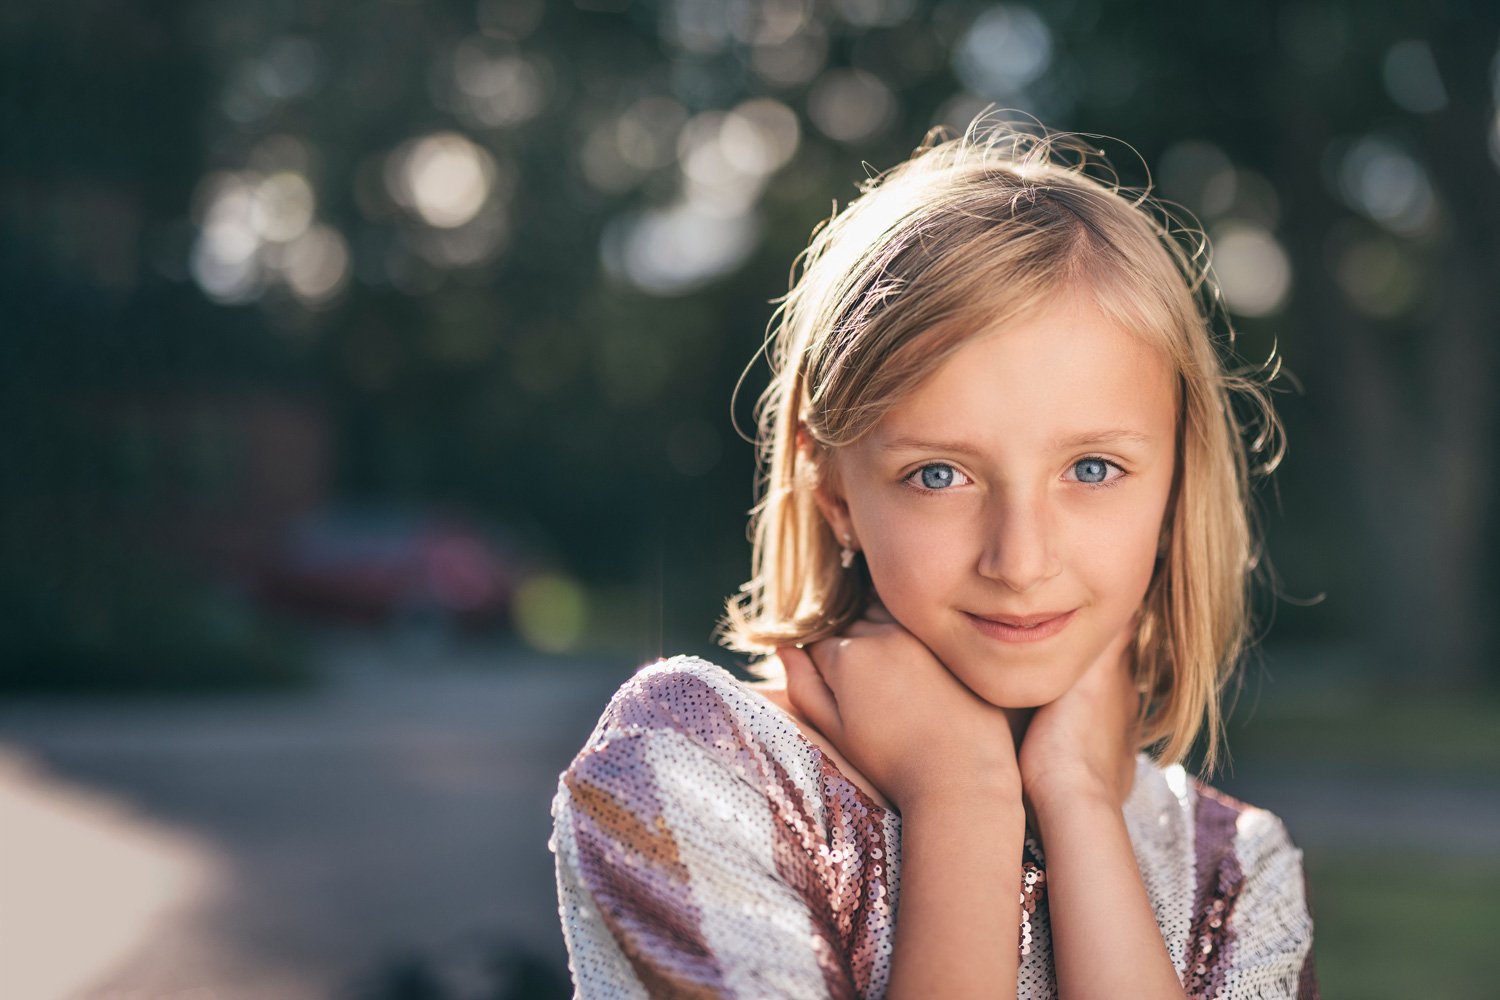 Medical Grade Ear Piercings — Just Kids Pediatrics